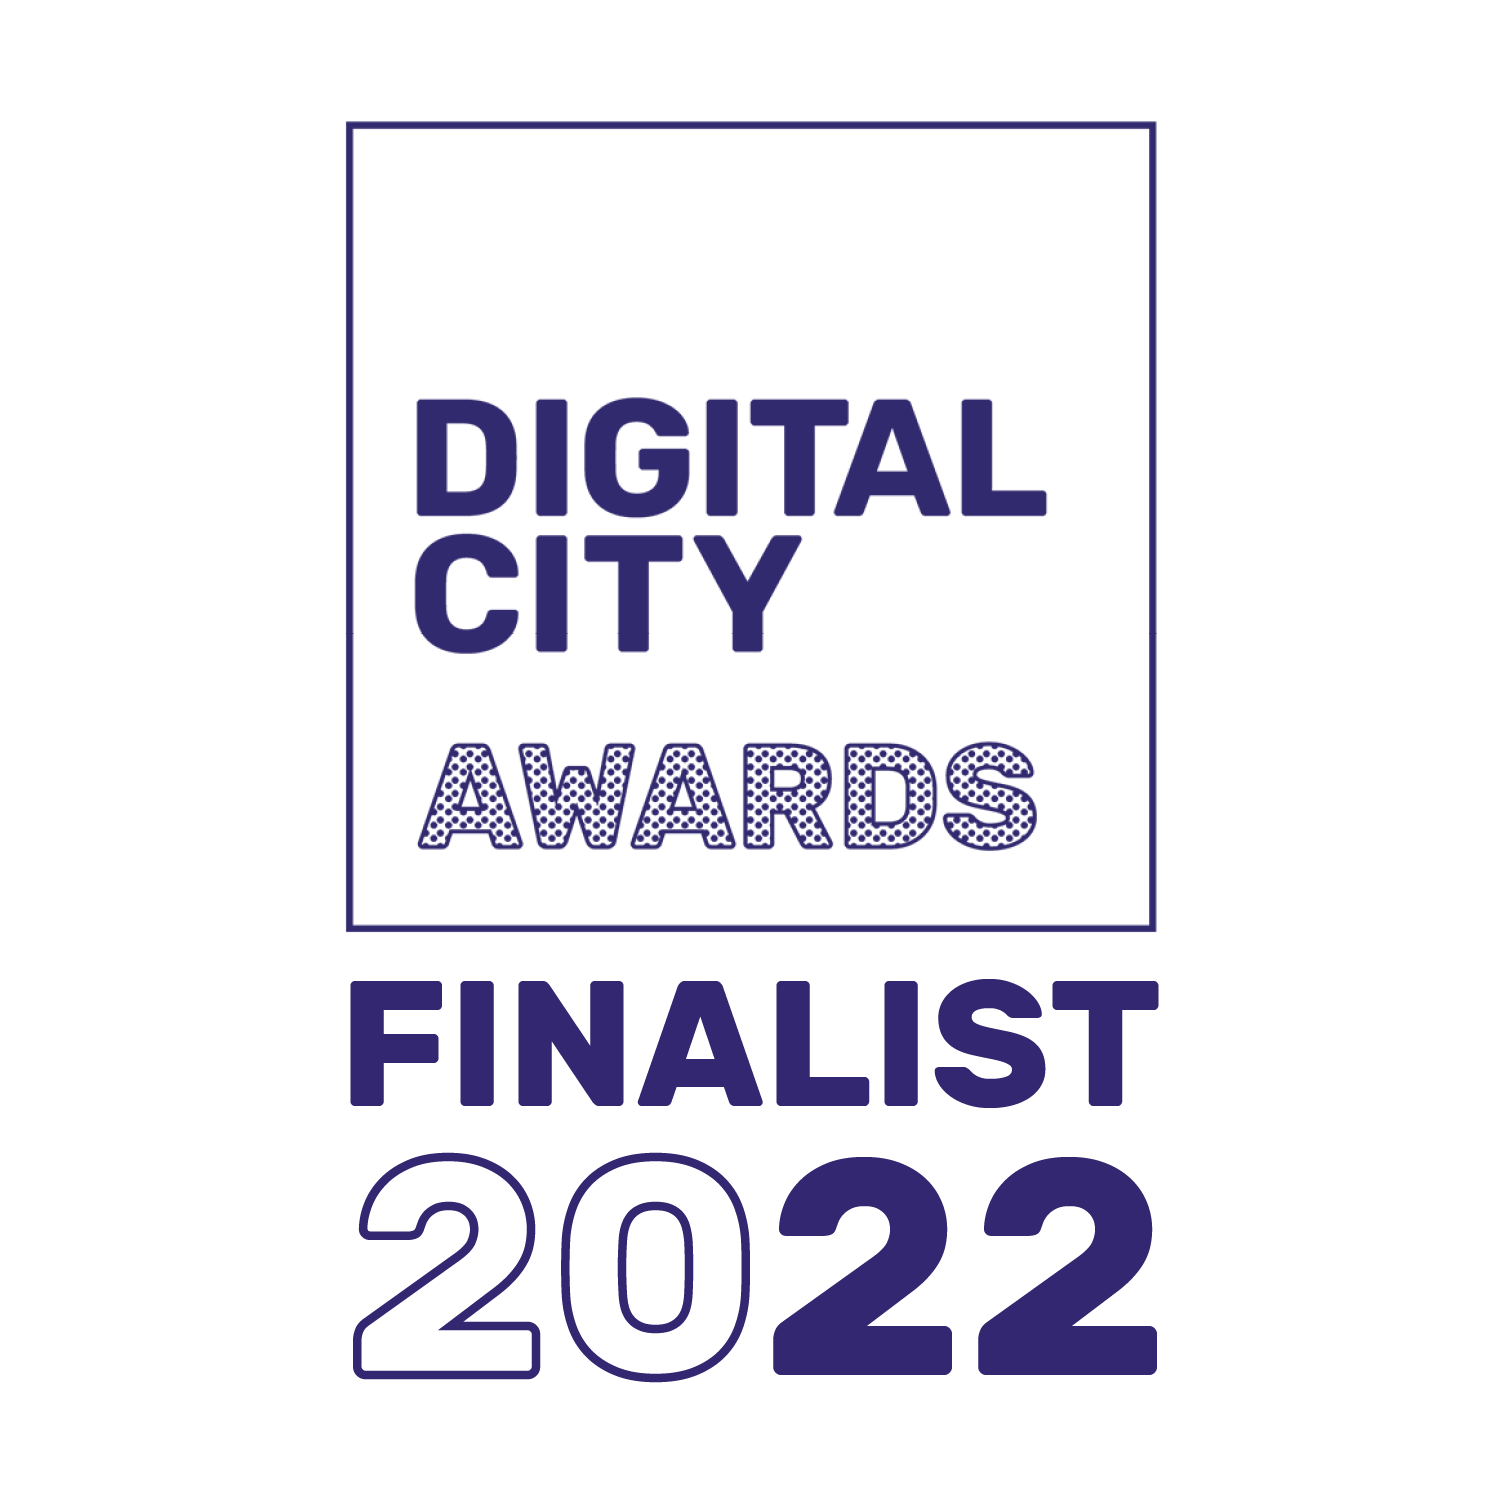 Digital City Awards Finalist 2022